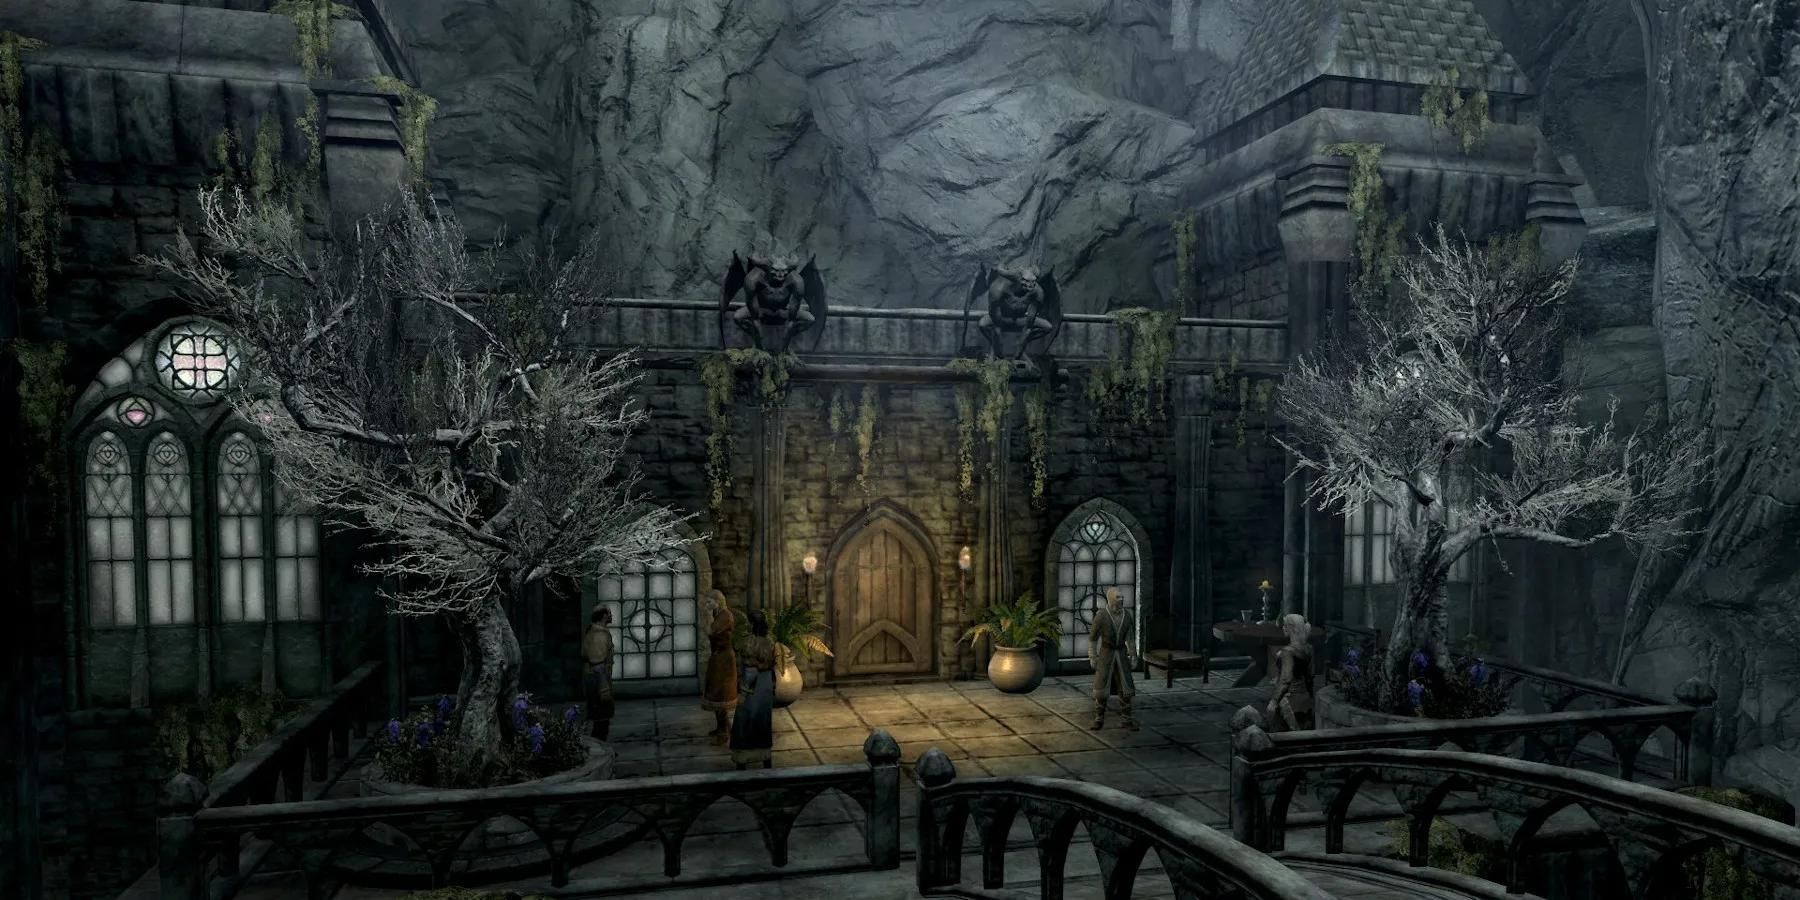 Skyrim The Elder Scrolls V 5 Anniversary Edition house home Bloodchill Manor In Bloodchill Cavern (Winterhold)